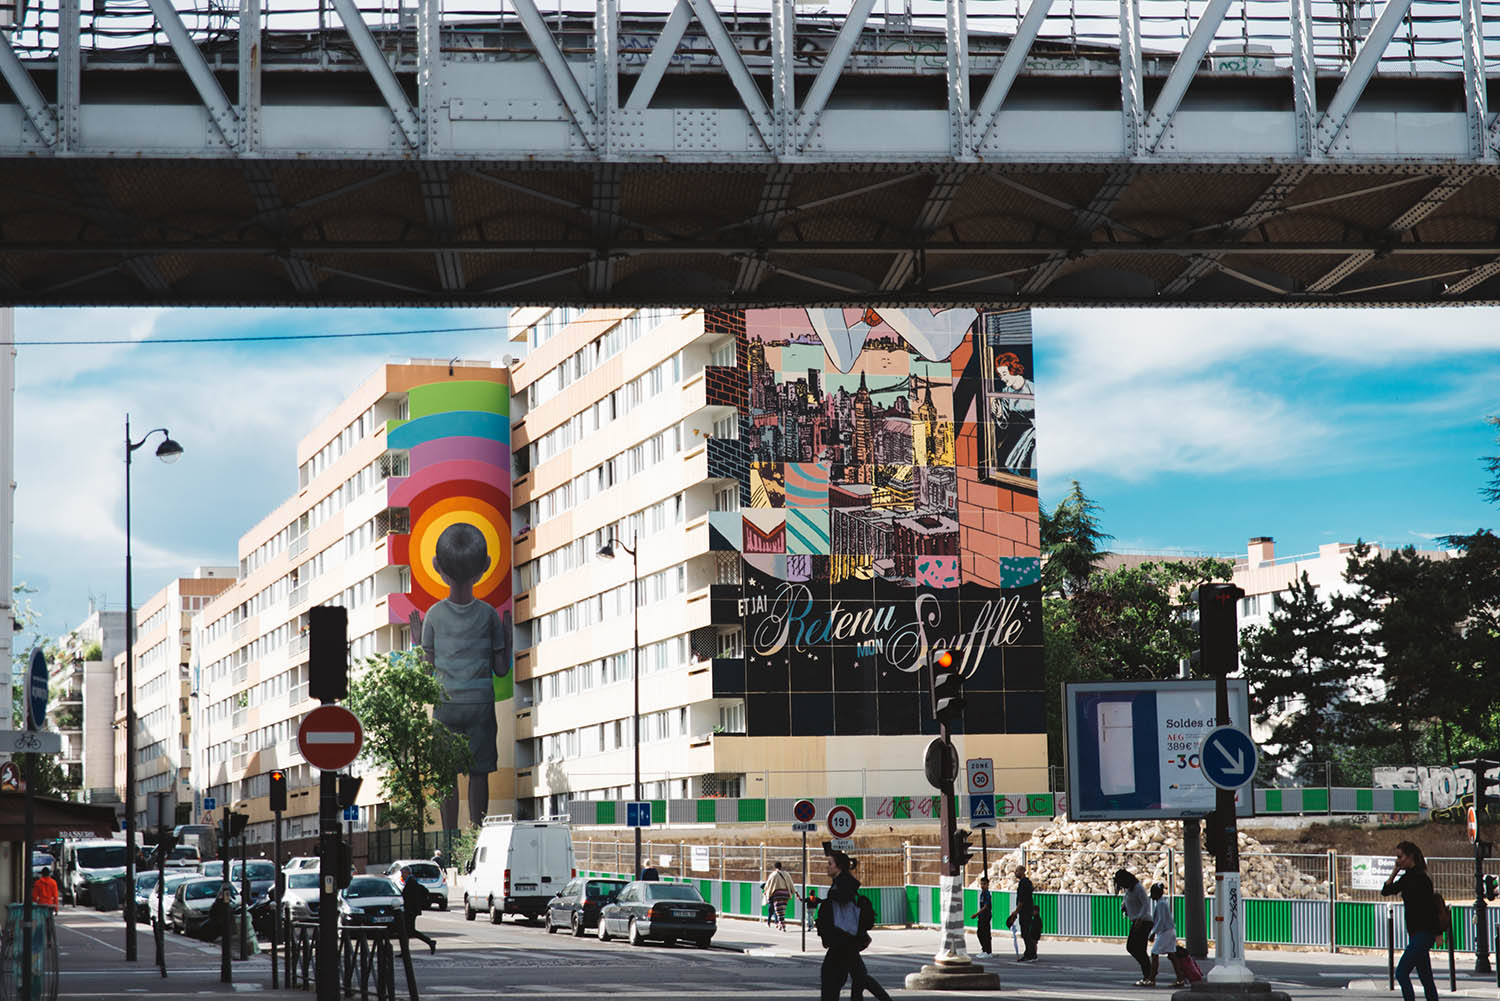 Colorful Street Art in Paris - 13th arrondissement